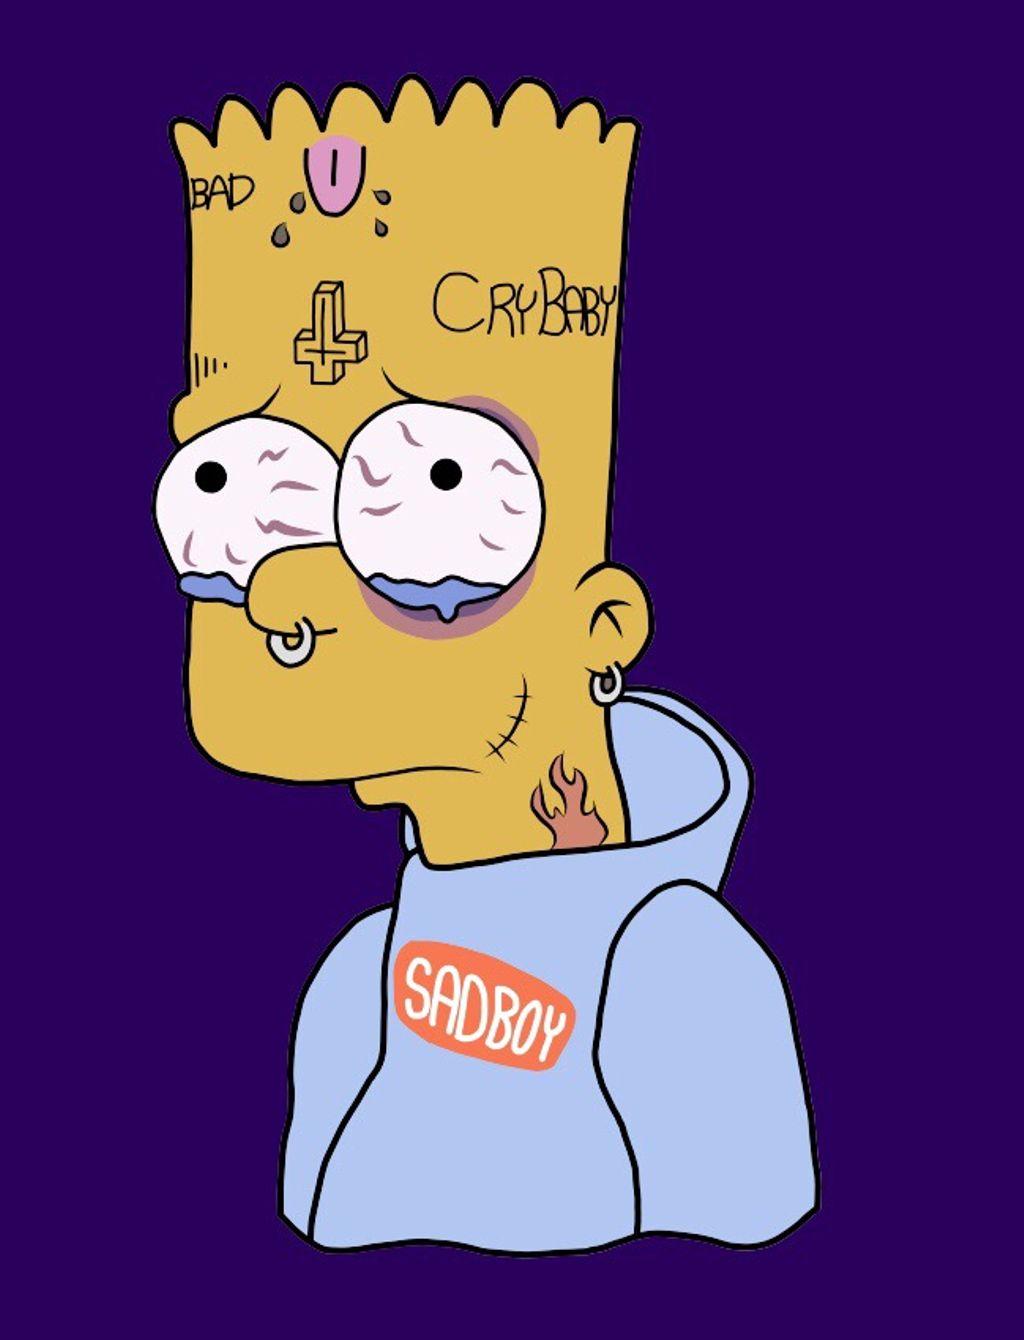 Depressed Bart Simpson Wallpapers Wallpaper Cave